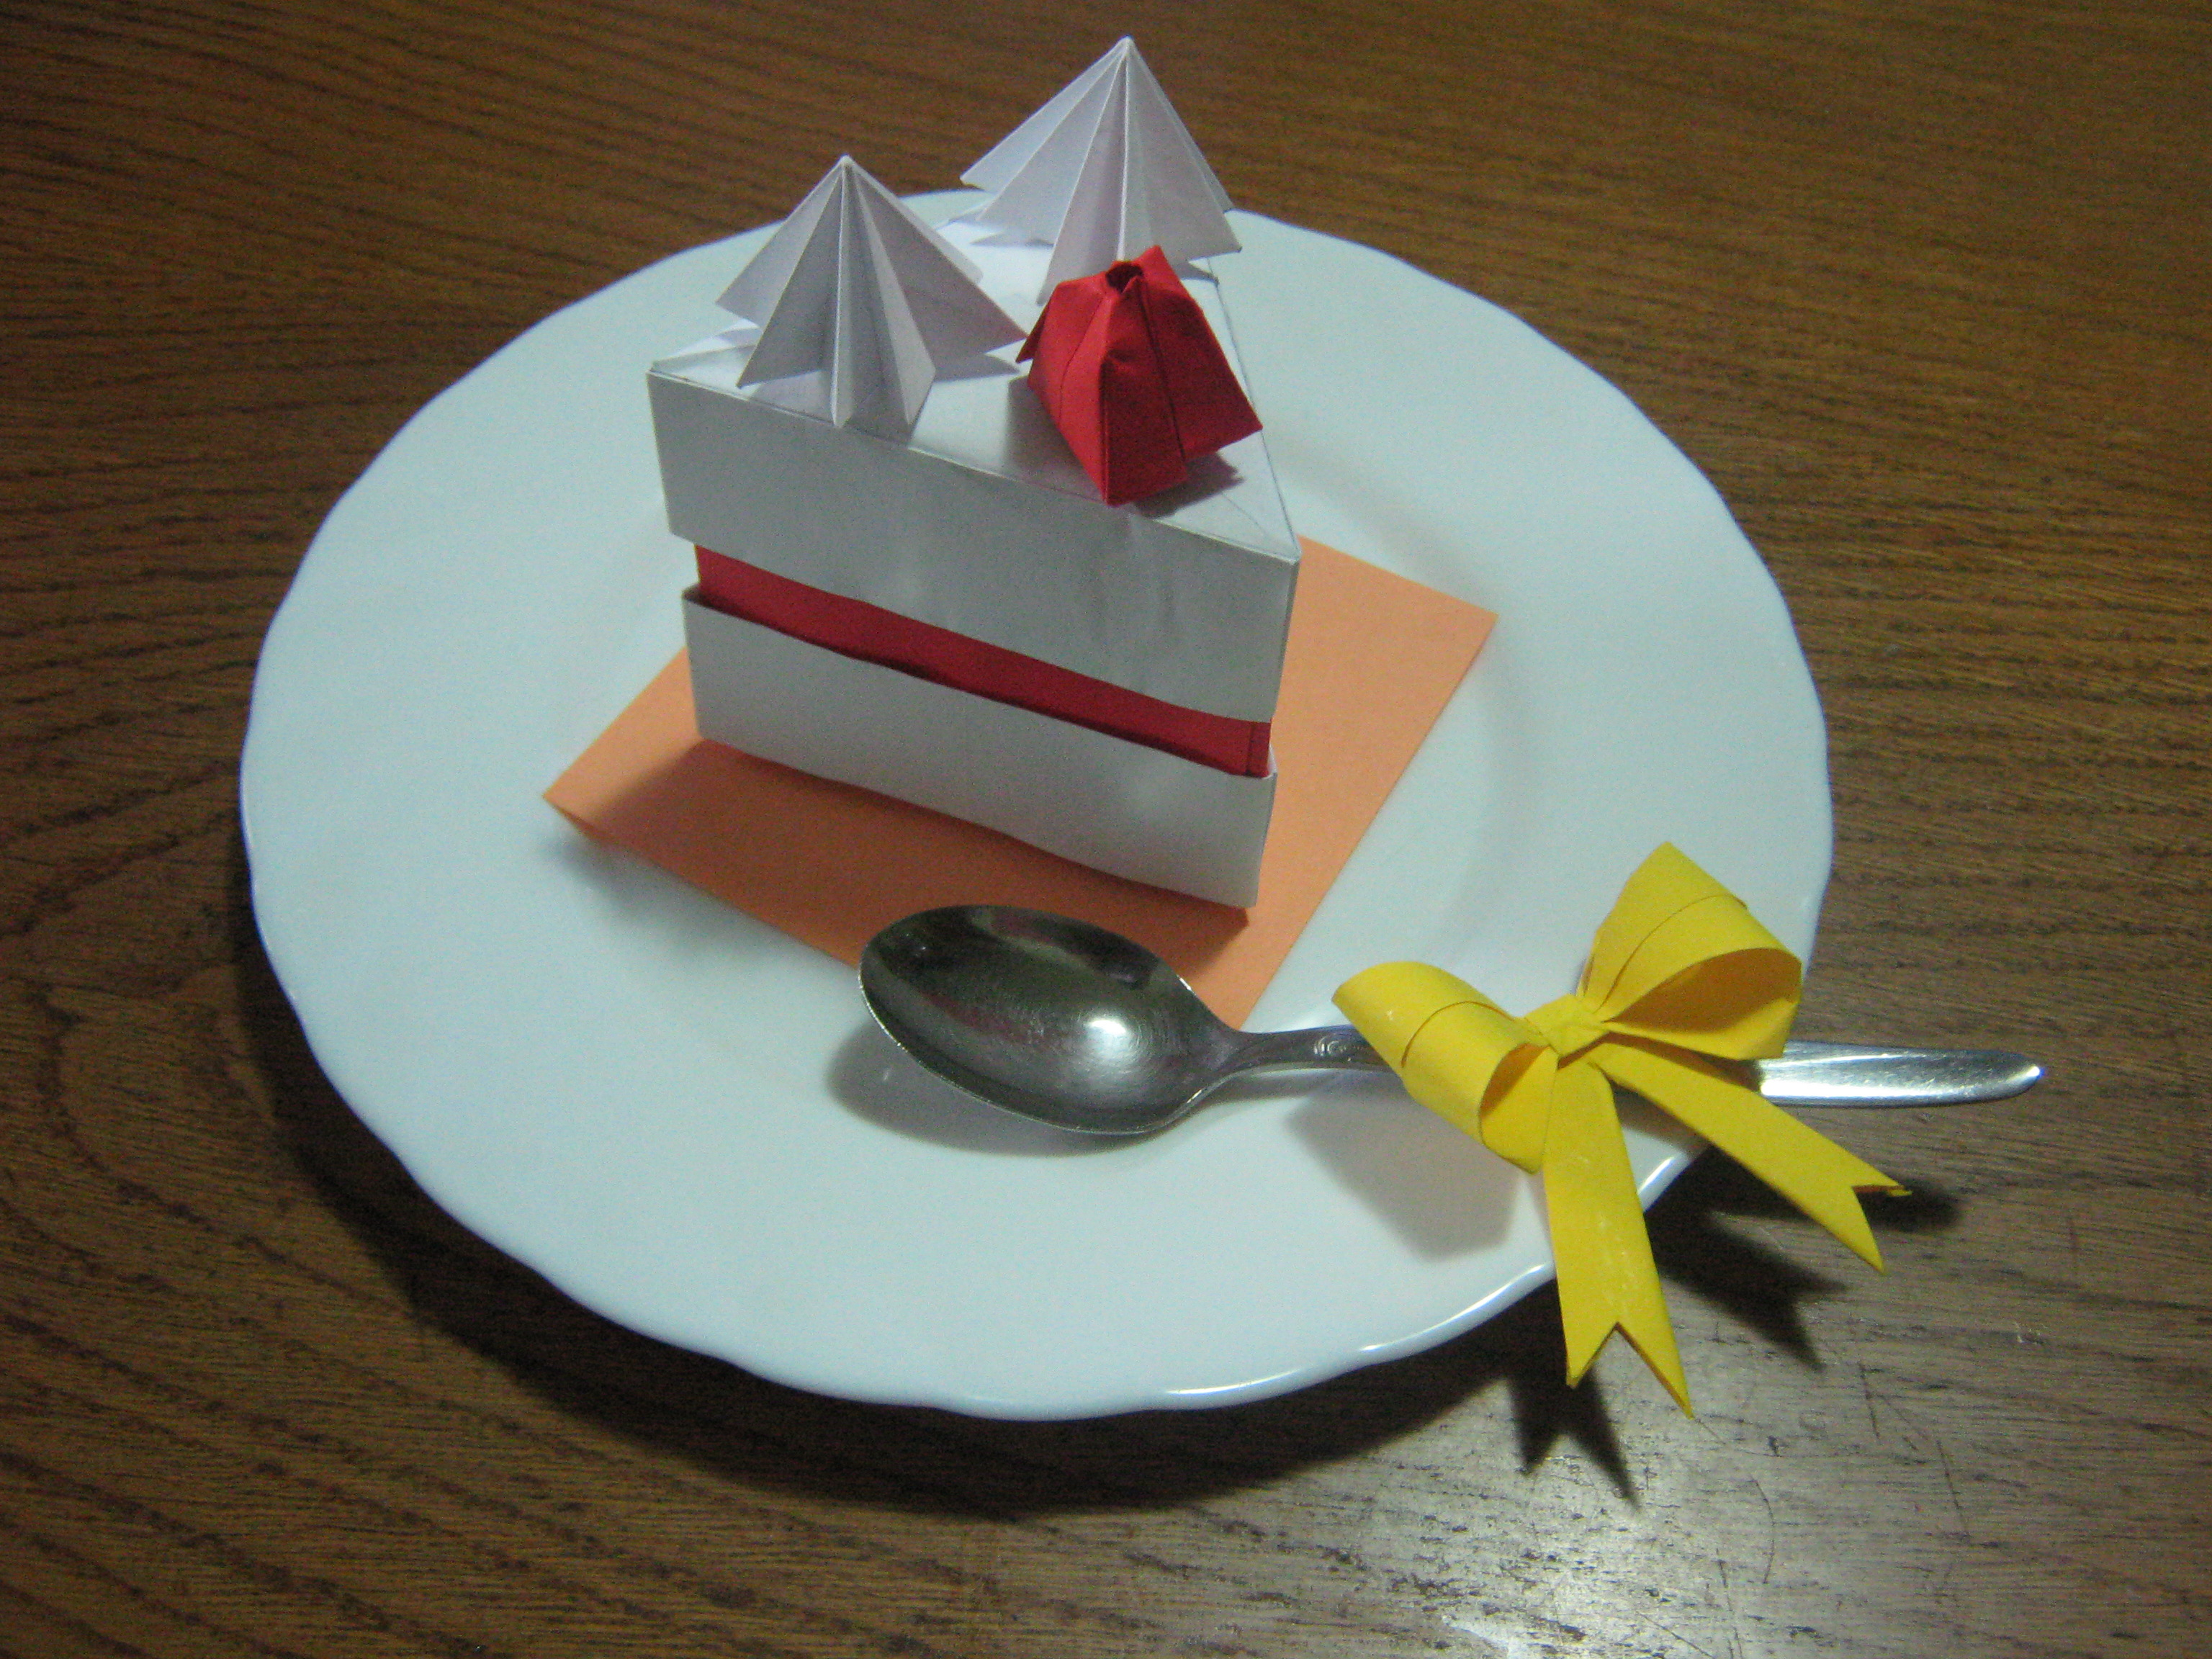 How To Make Origami Cake Tutorial Origami Cake Box Learn 2 Origami Origami Paper Craft